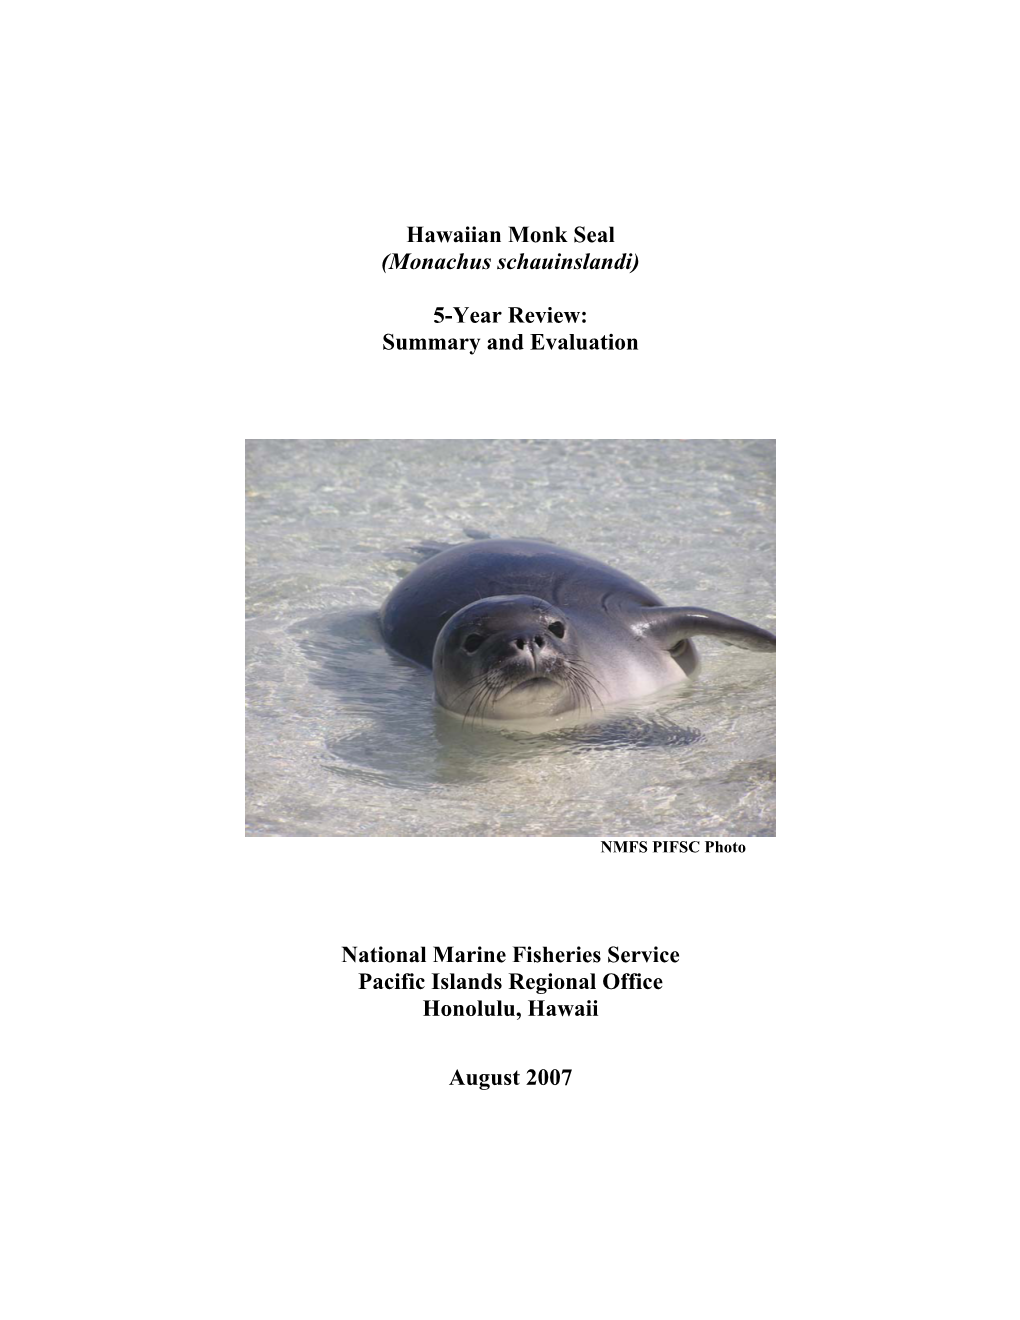 Hawaiian Monk Seal (Monachus Schauinslandi) 5-Year Review